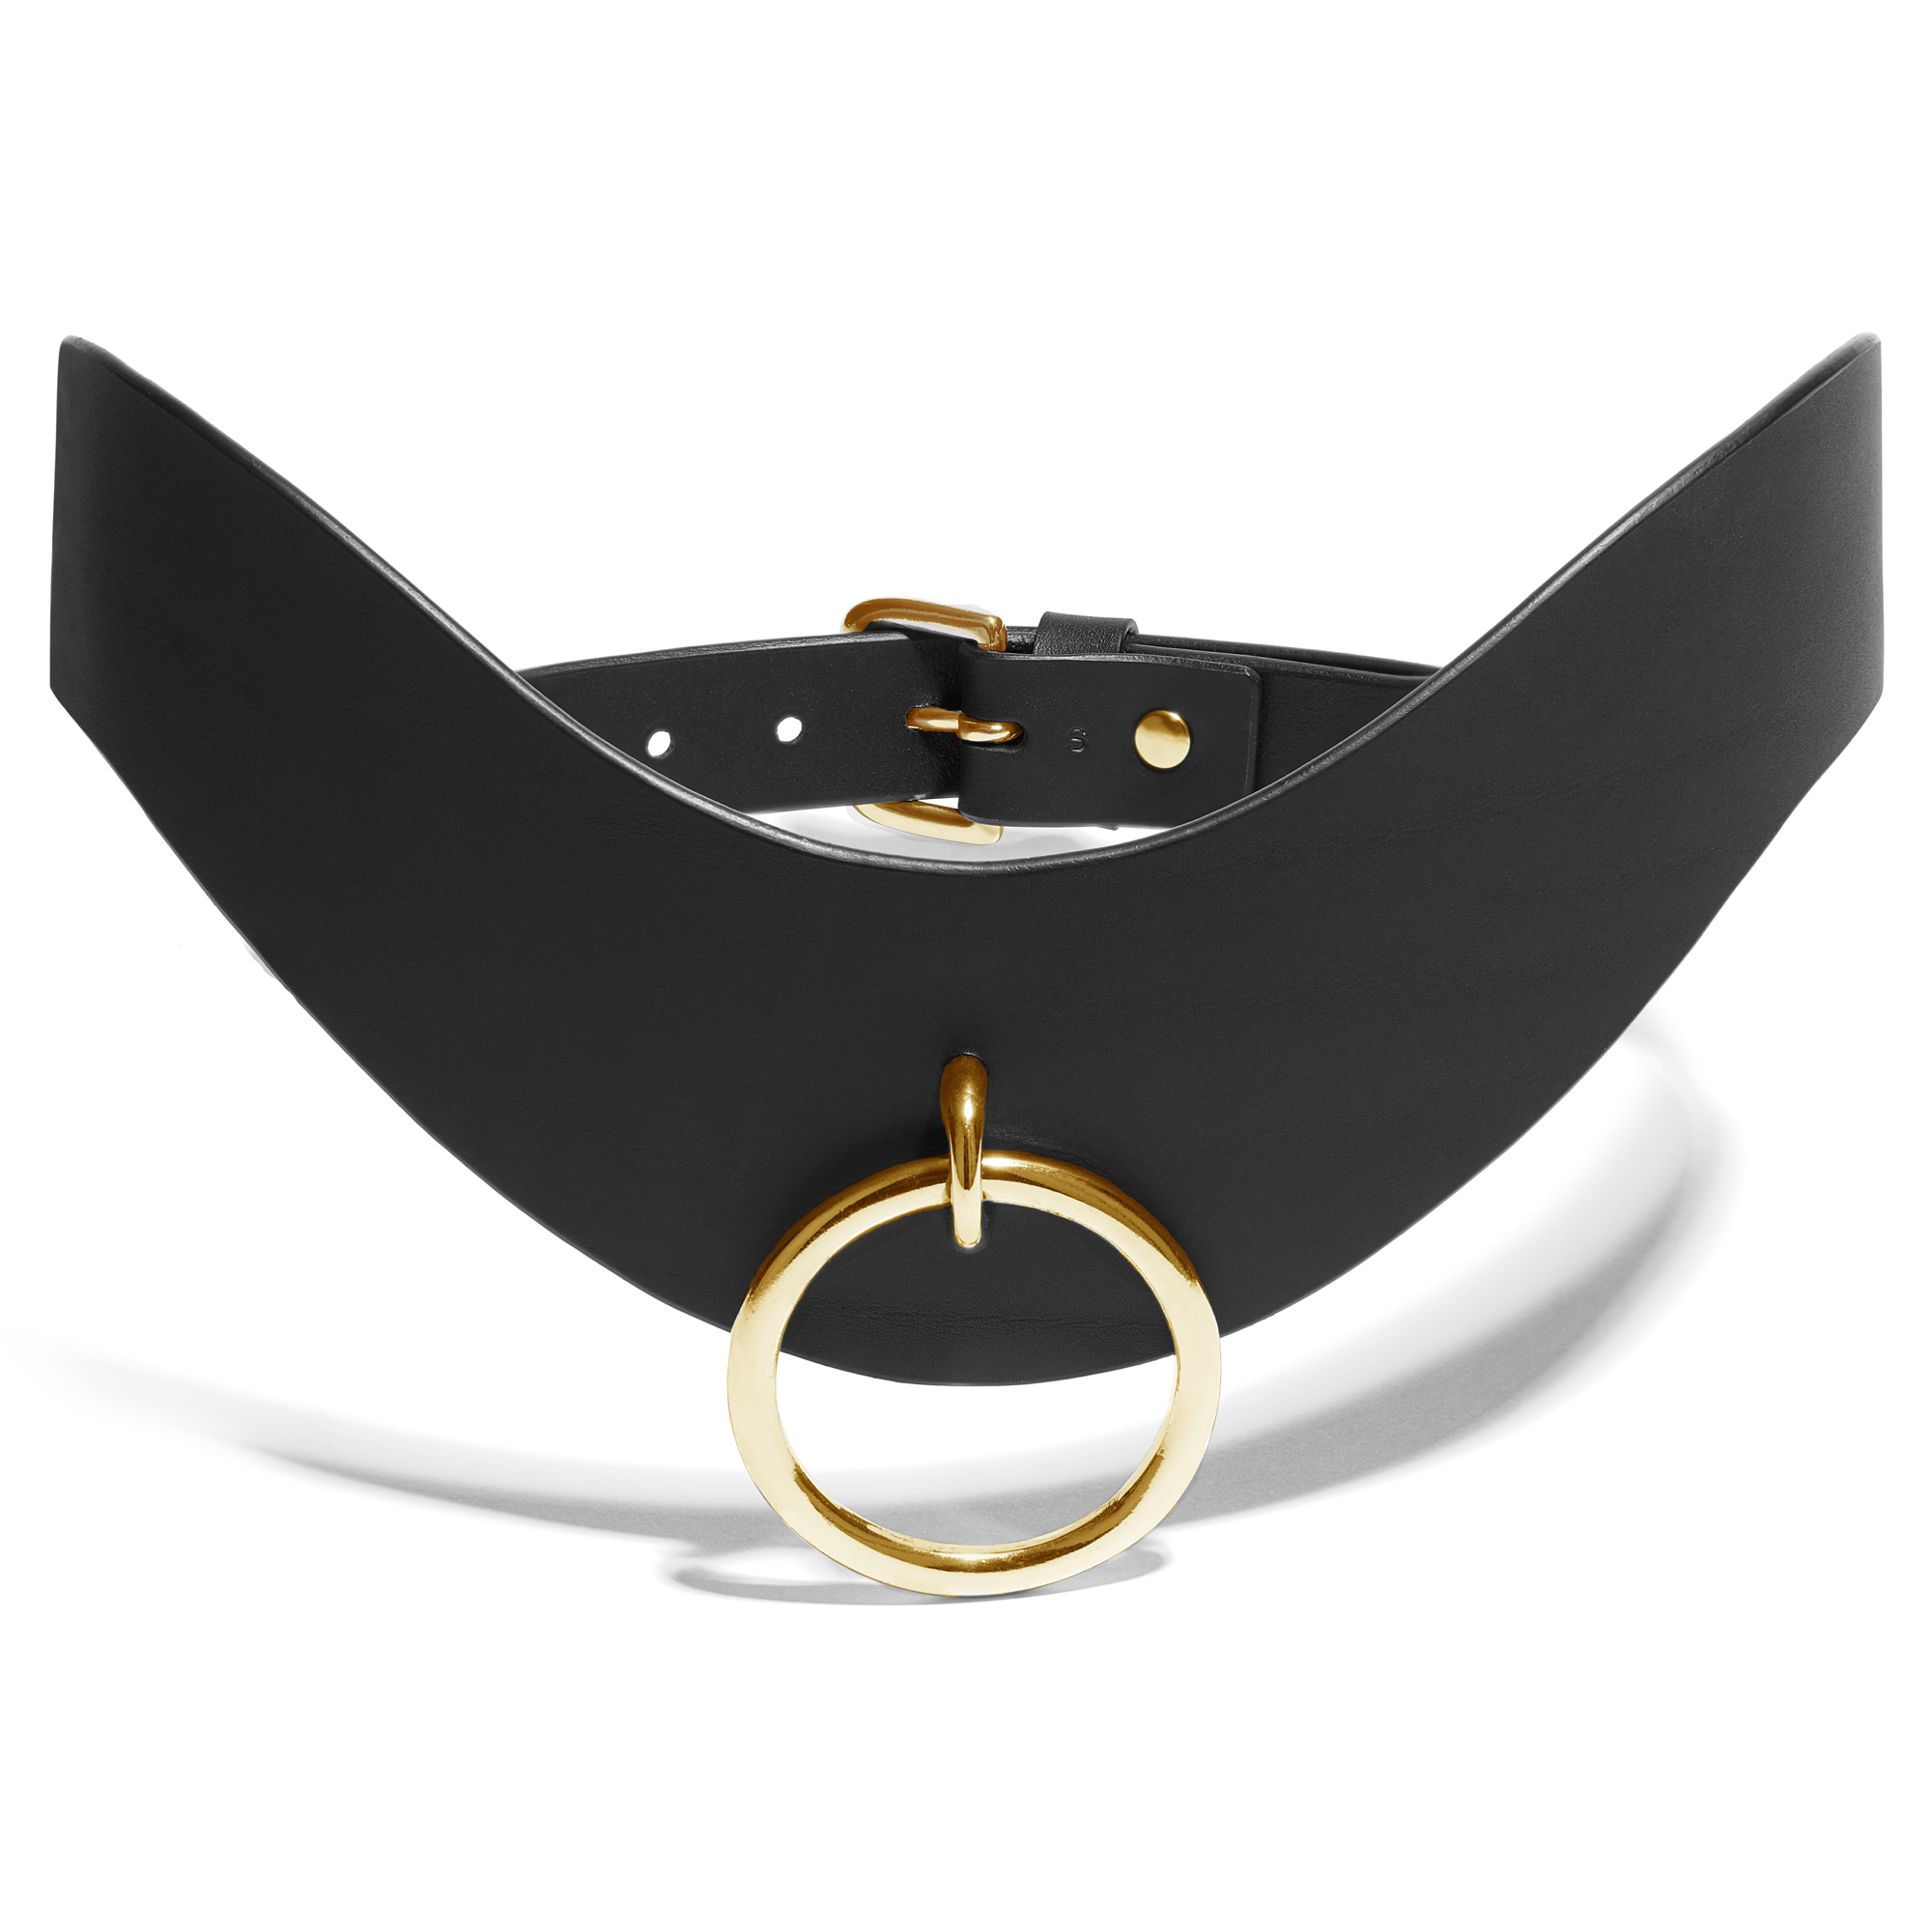 O-ring curved leather belt by Fleet Ilya - babylikestopony